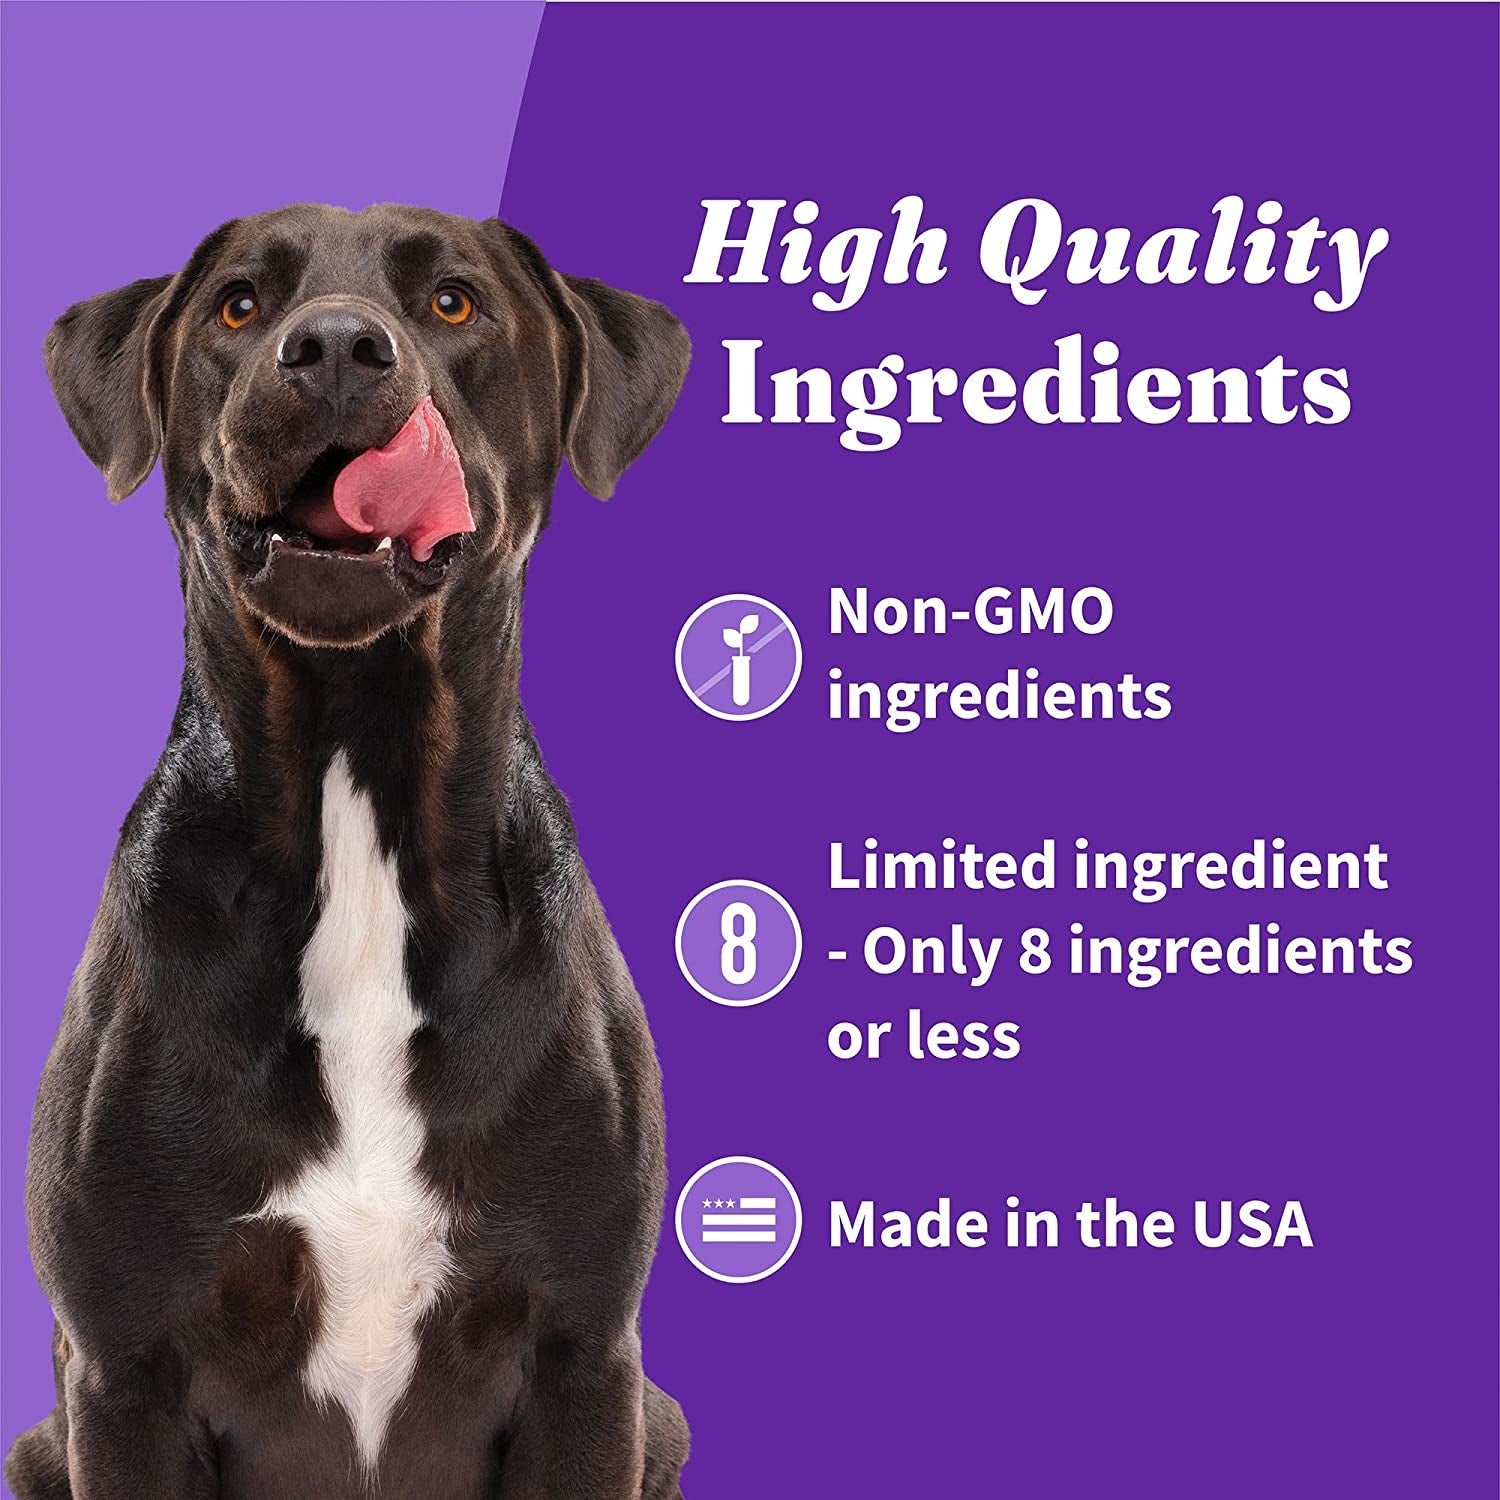 Plant-Based Dog Treats Variety Pack, Oats & Blueberries, Peanut Butter & Banana, Peanuts & Pumkin, Vegan Dog Treat Pouch, 8Oz Bag, 3 Count